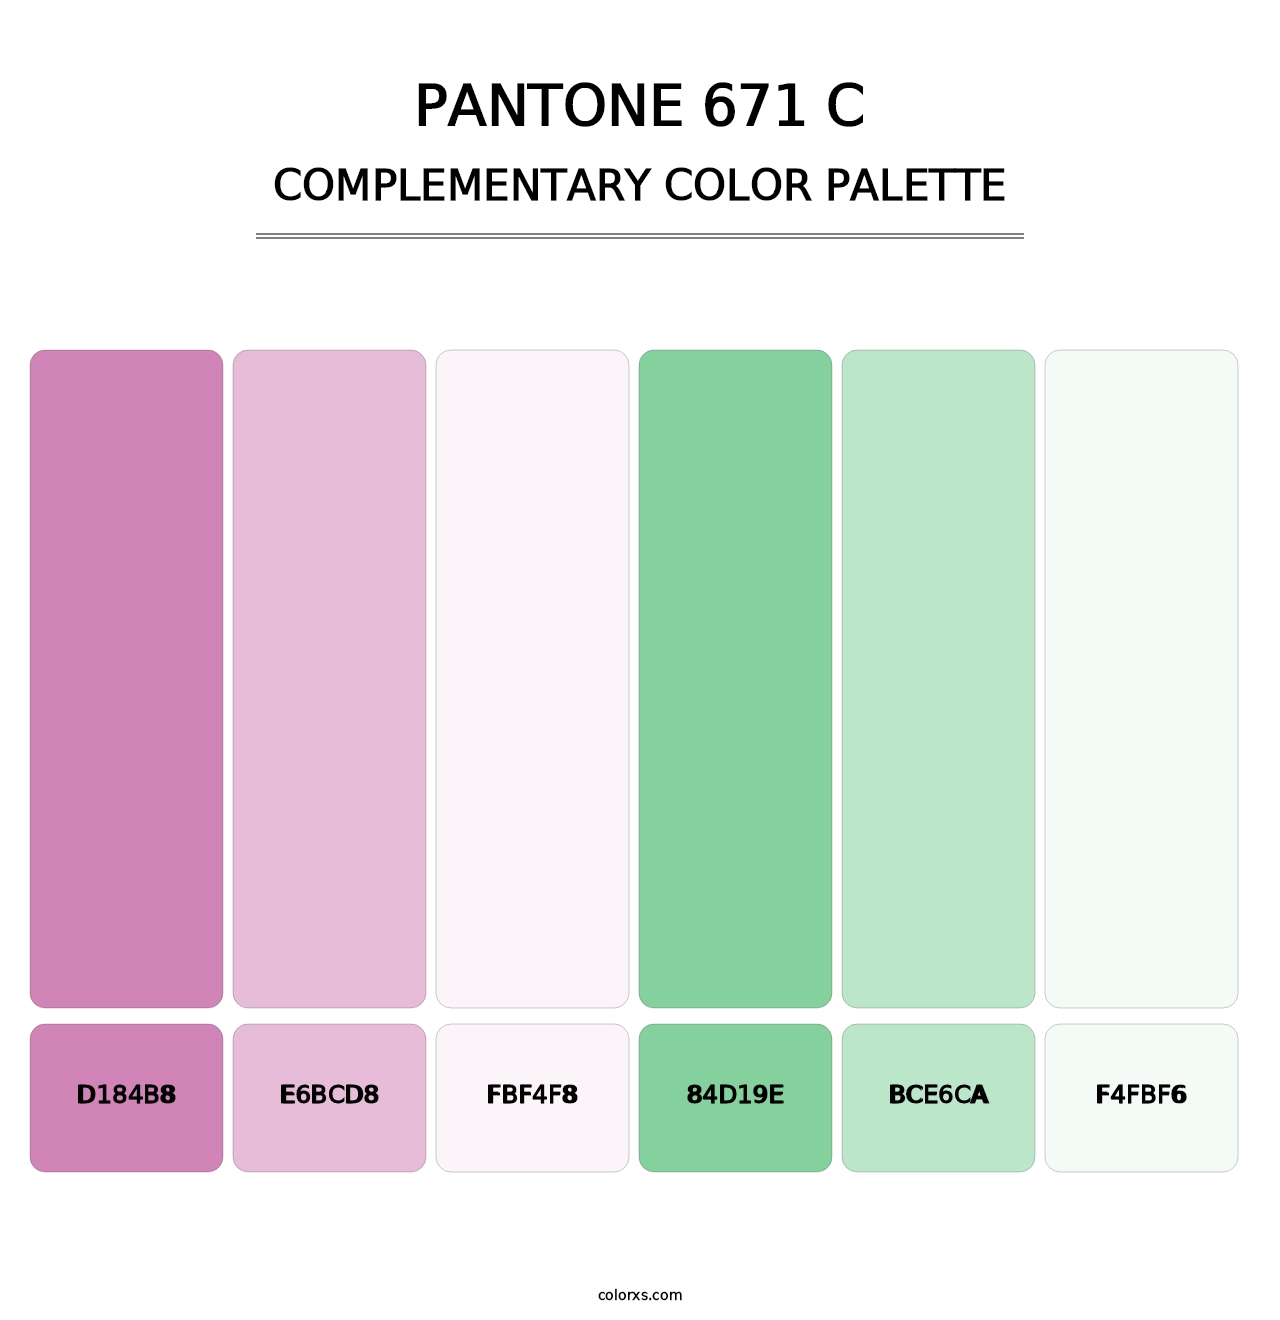 PANTONE 671 C - Complementary Color Palette